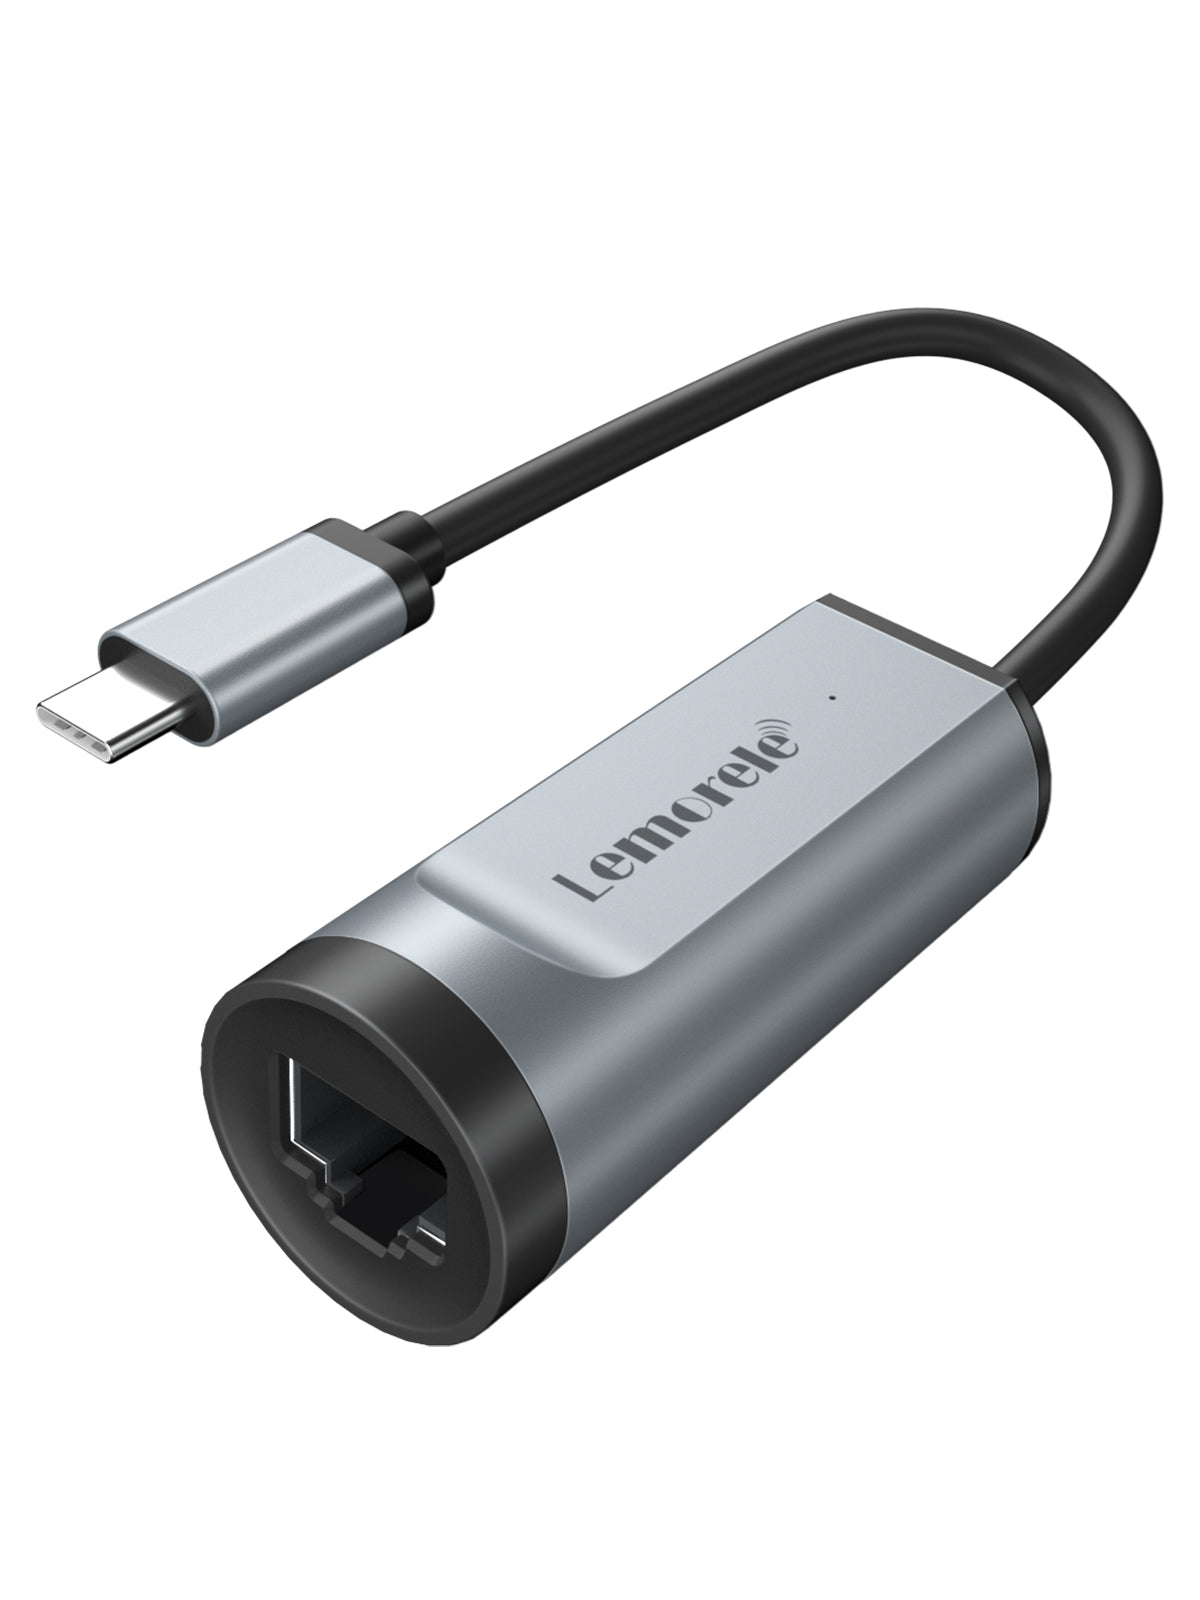 Lemorele USB C to Ethernet with Charging Adapter【#TC36】